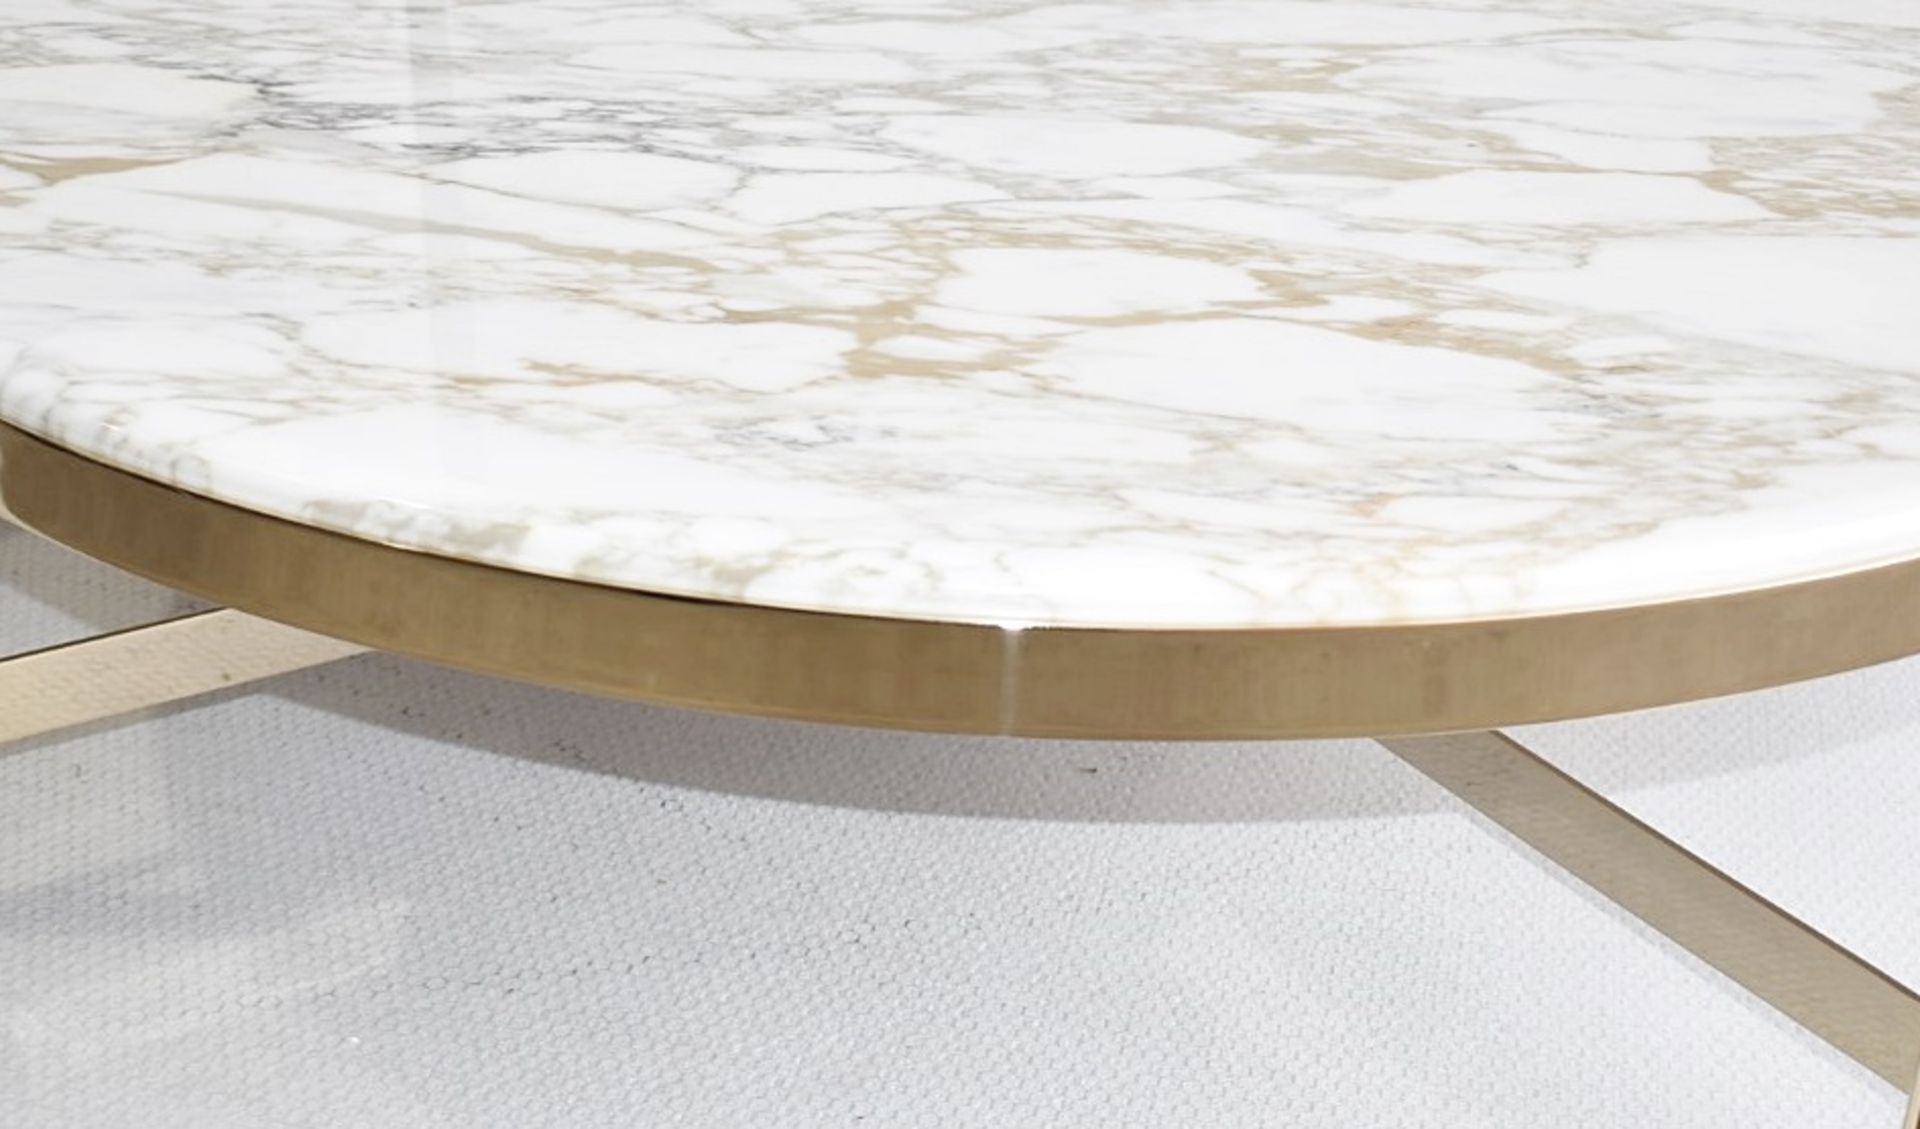 1 x ELIE SAAB MAISON 'Zenith' Luxury Italian Marble Topped Coffee Table - Original Price £6,480 - Image 5 of 6